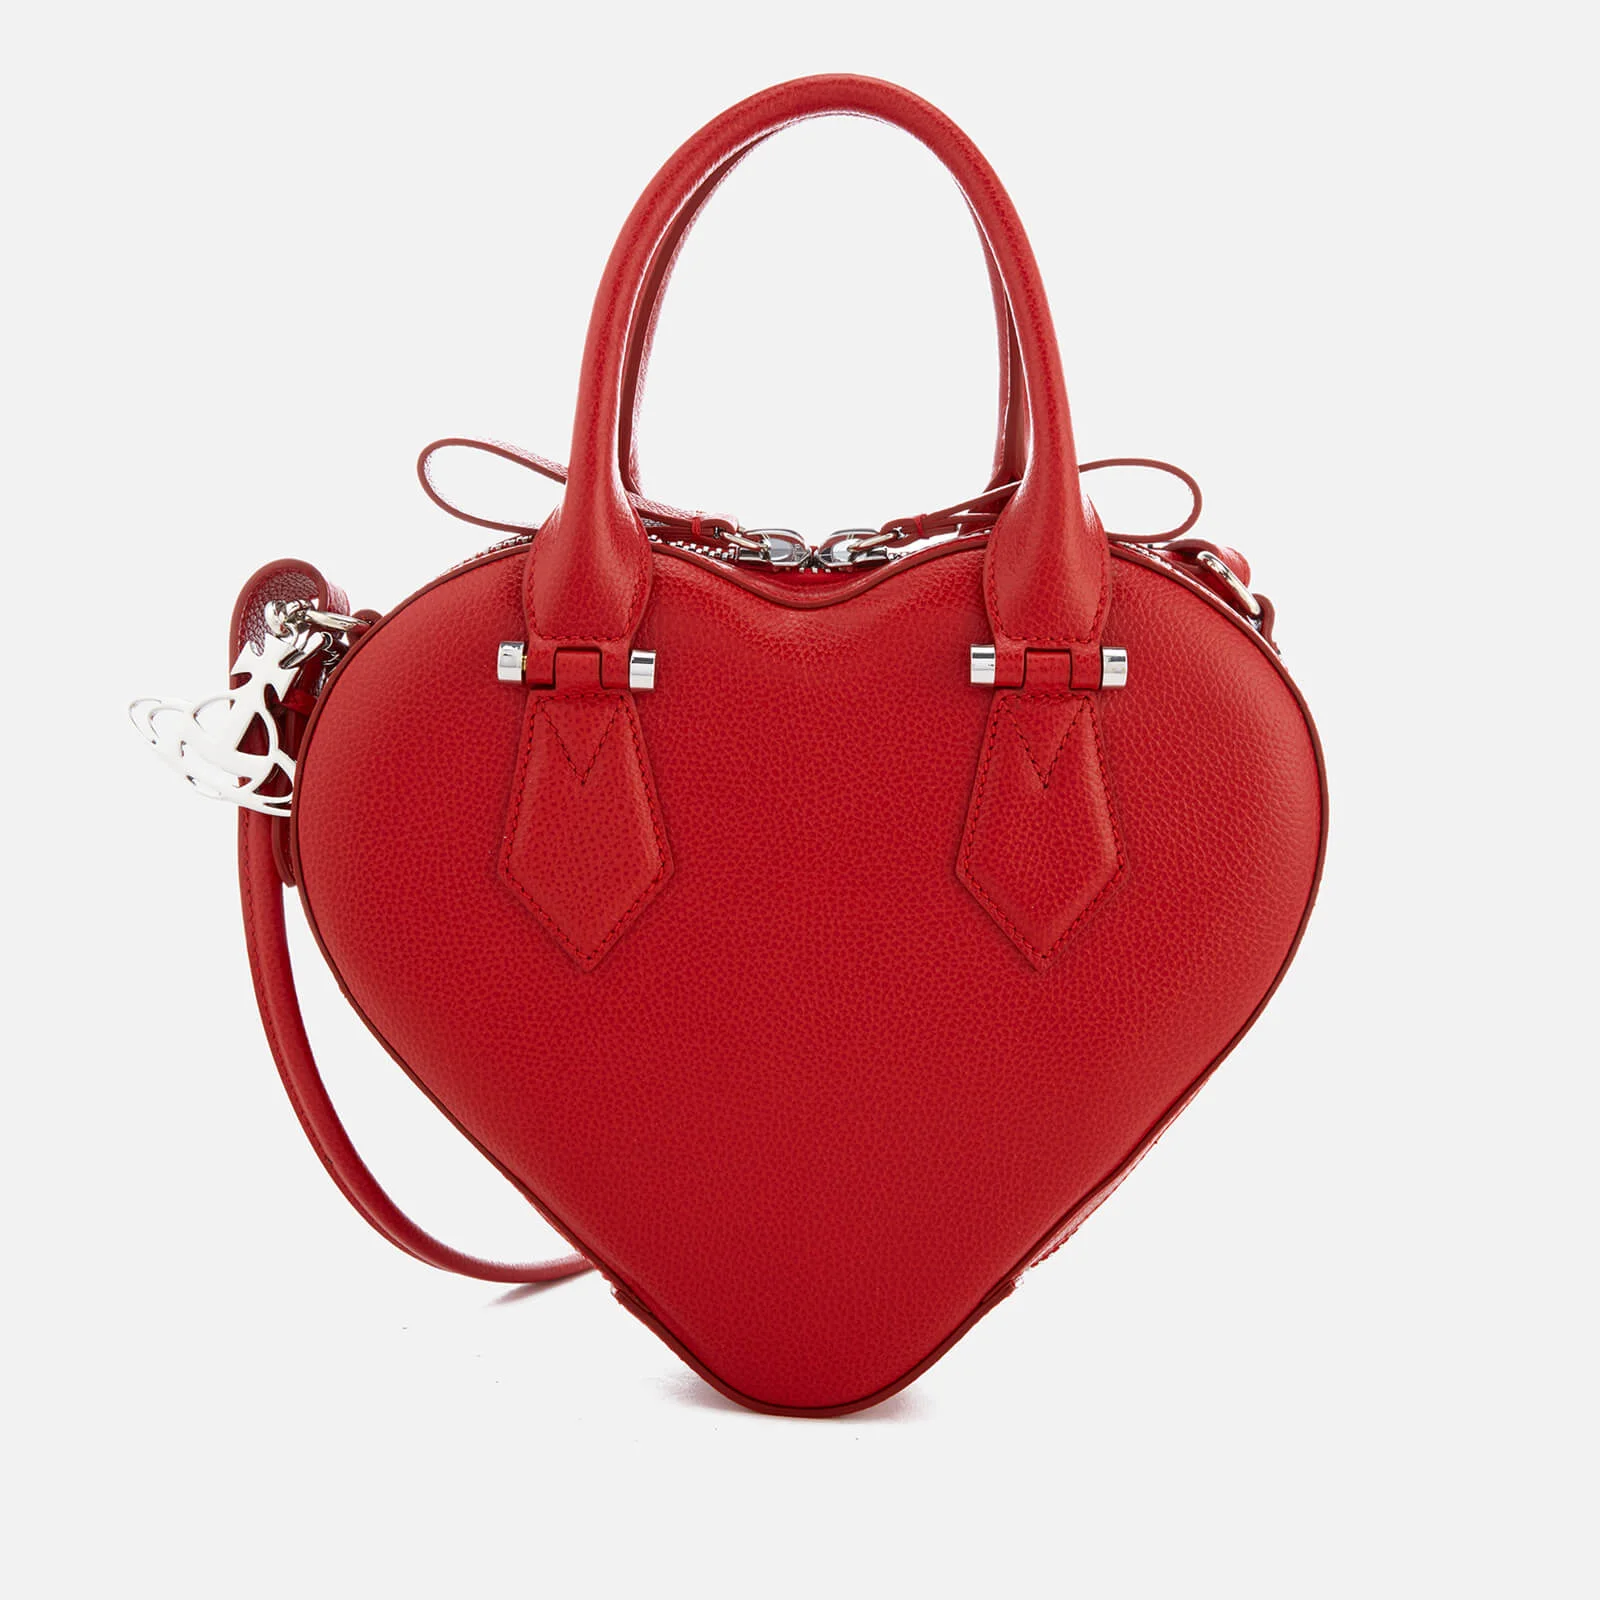 Vivienne Westwood Women's Johanna Heart Handbag - Red Image 1